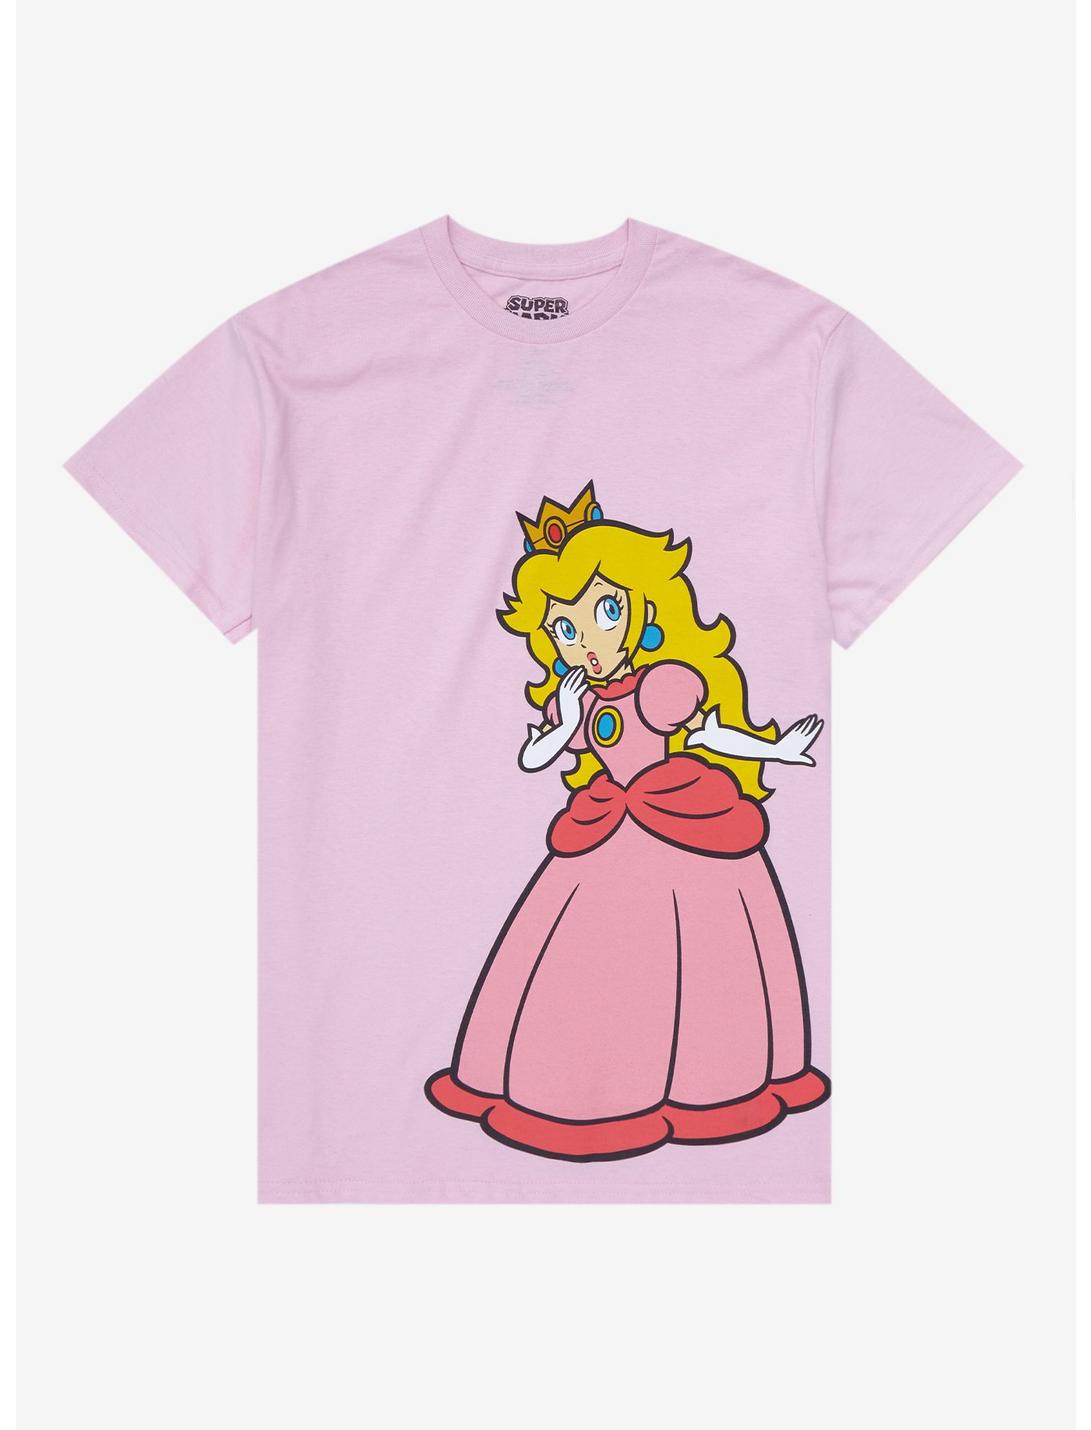 Super Mario Bros. Princess Peach Jumbo Graphic T-Shirt, PINK, hi-res